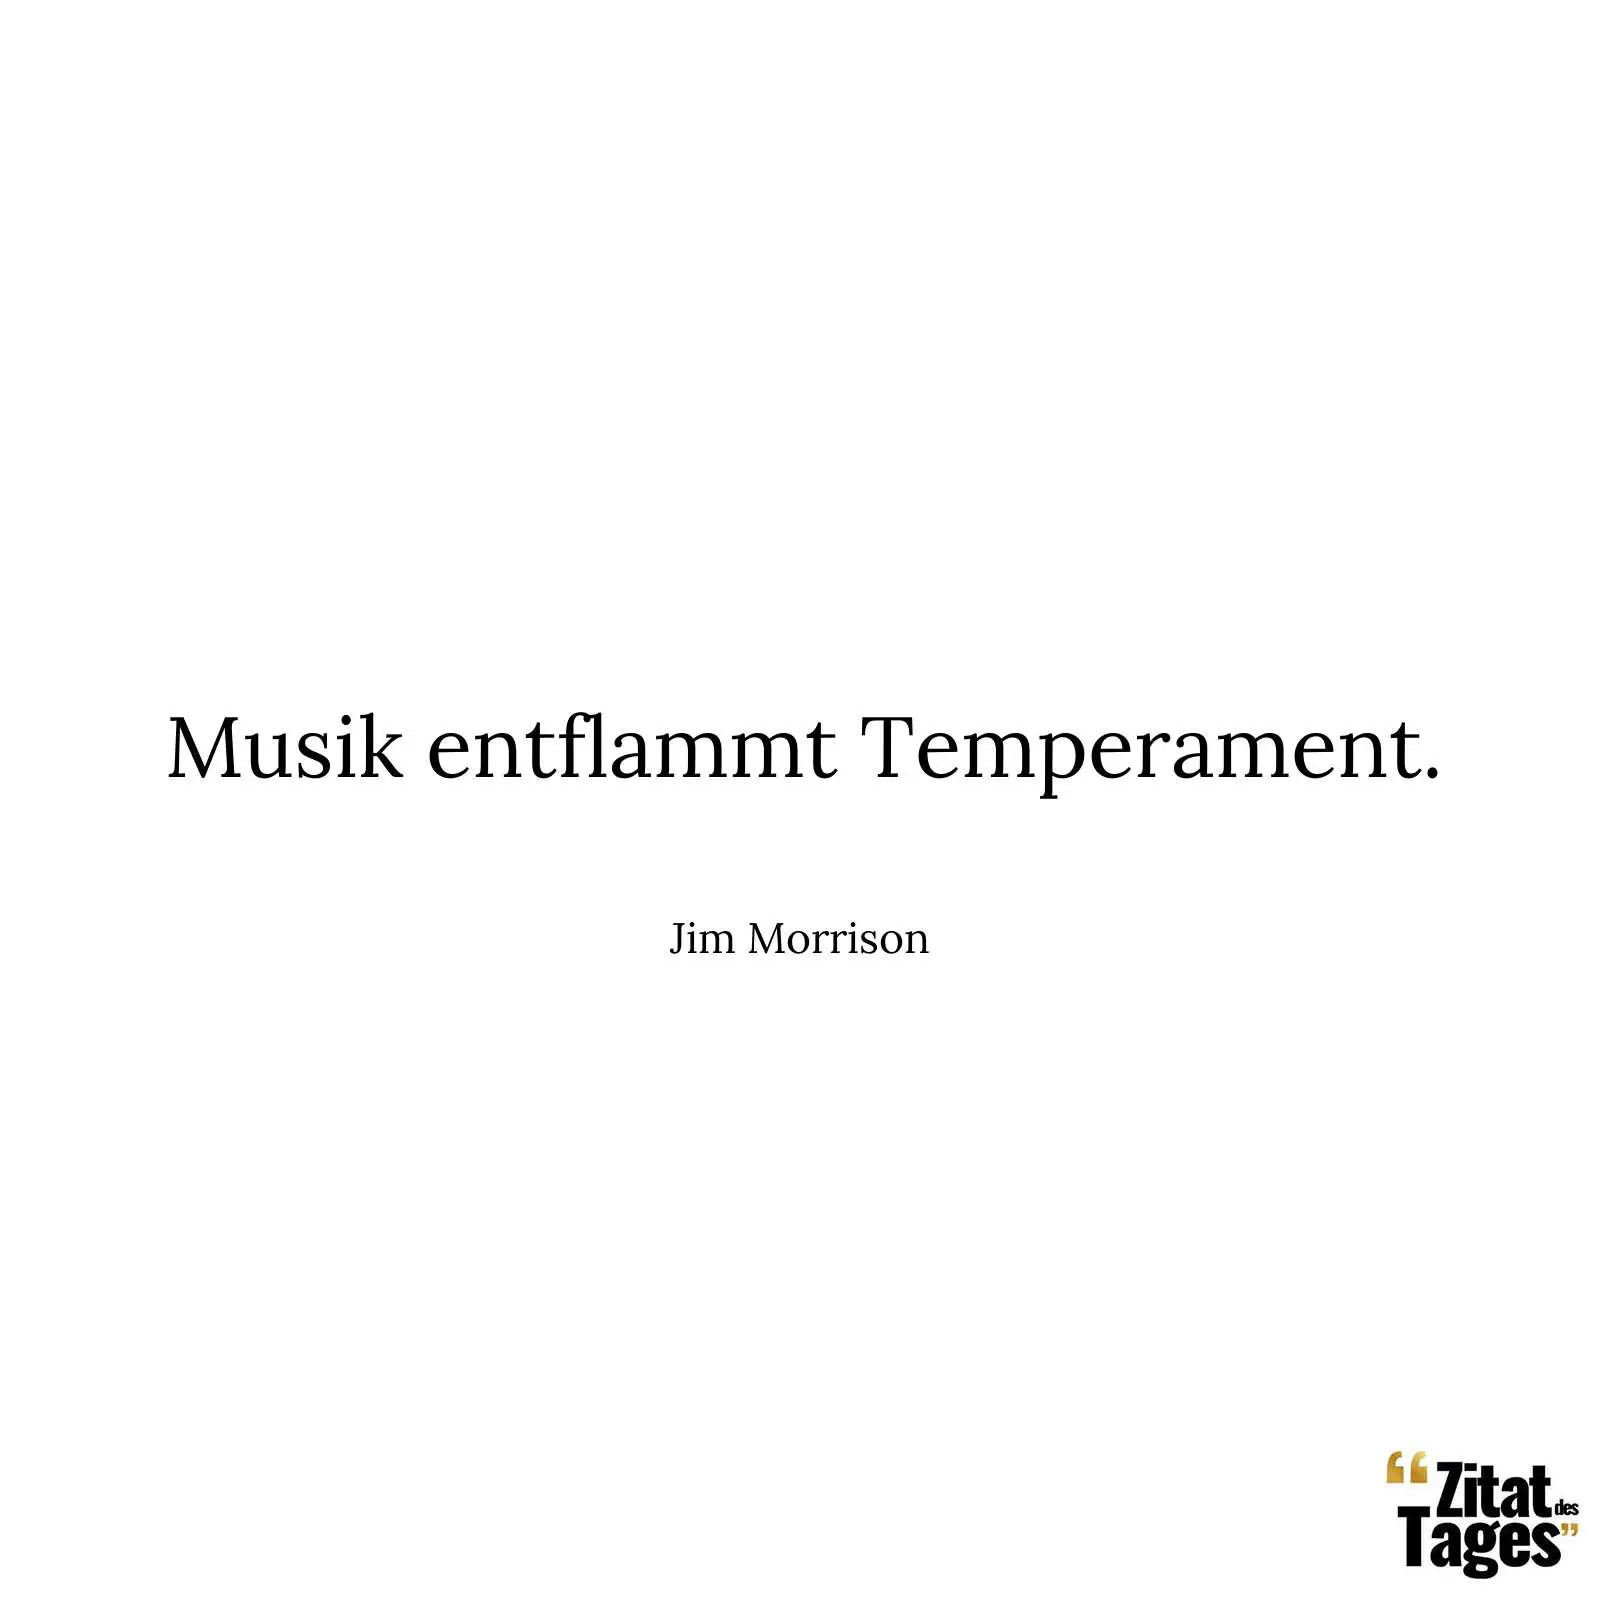 Musik entflammt Temperament. - Jim Morrison